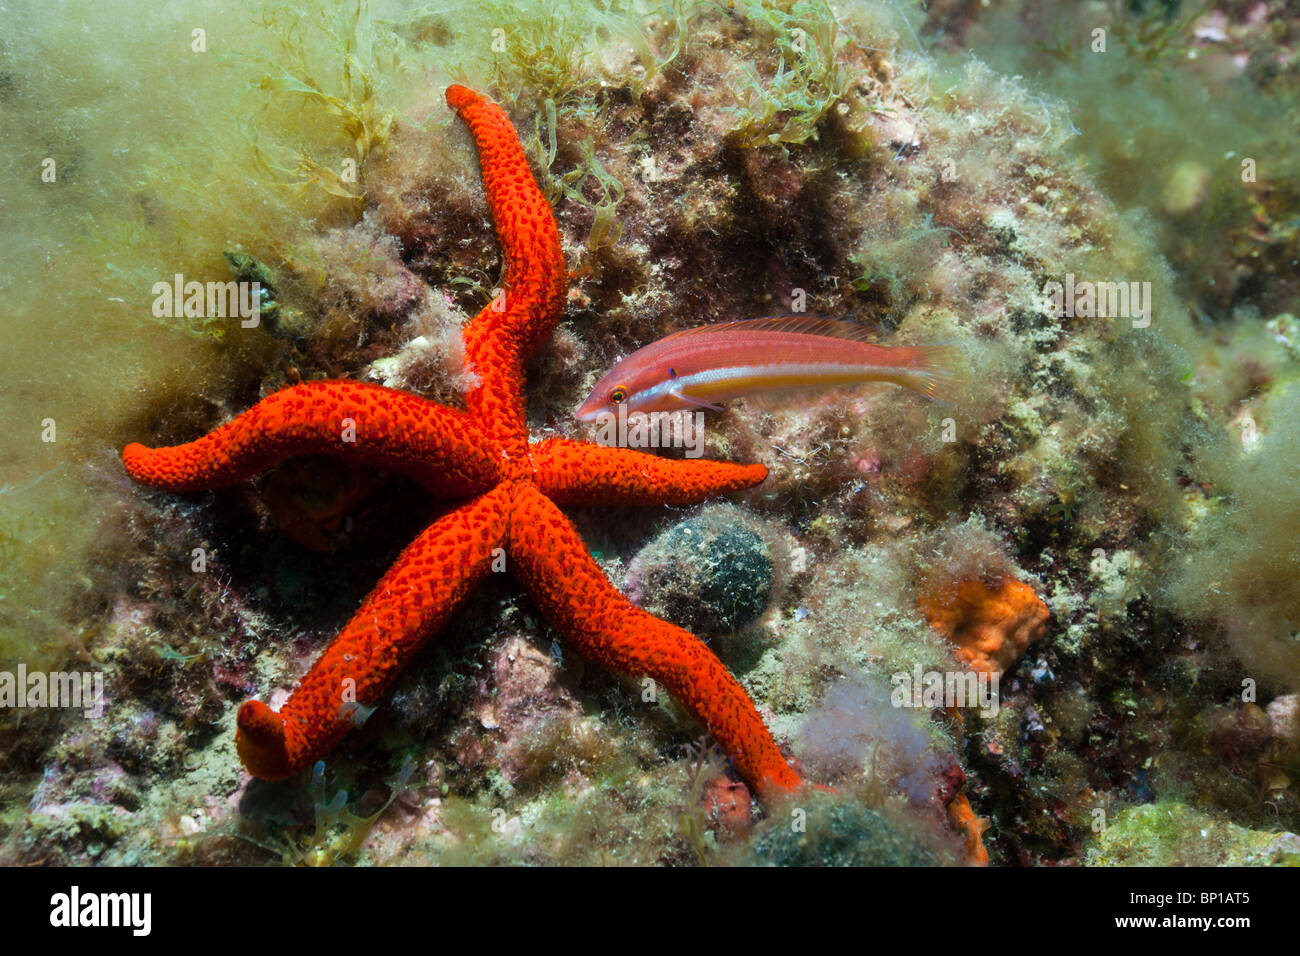 Rainbow Wrasse and Common Starfish, Coris julis, Echinaster sepositus, Cap de Creus, Costa Brava, Spain Stock Photo